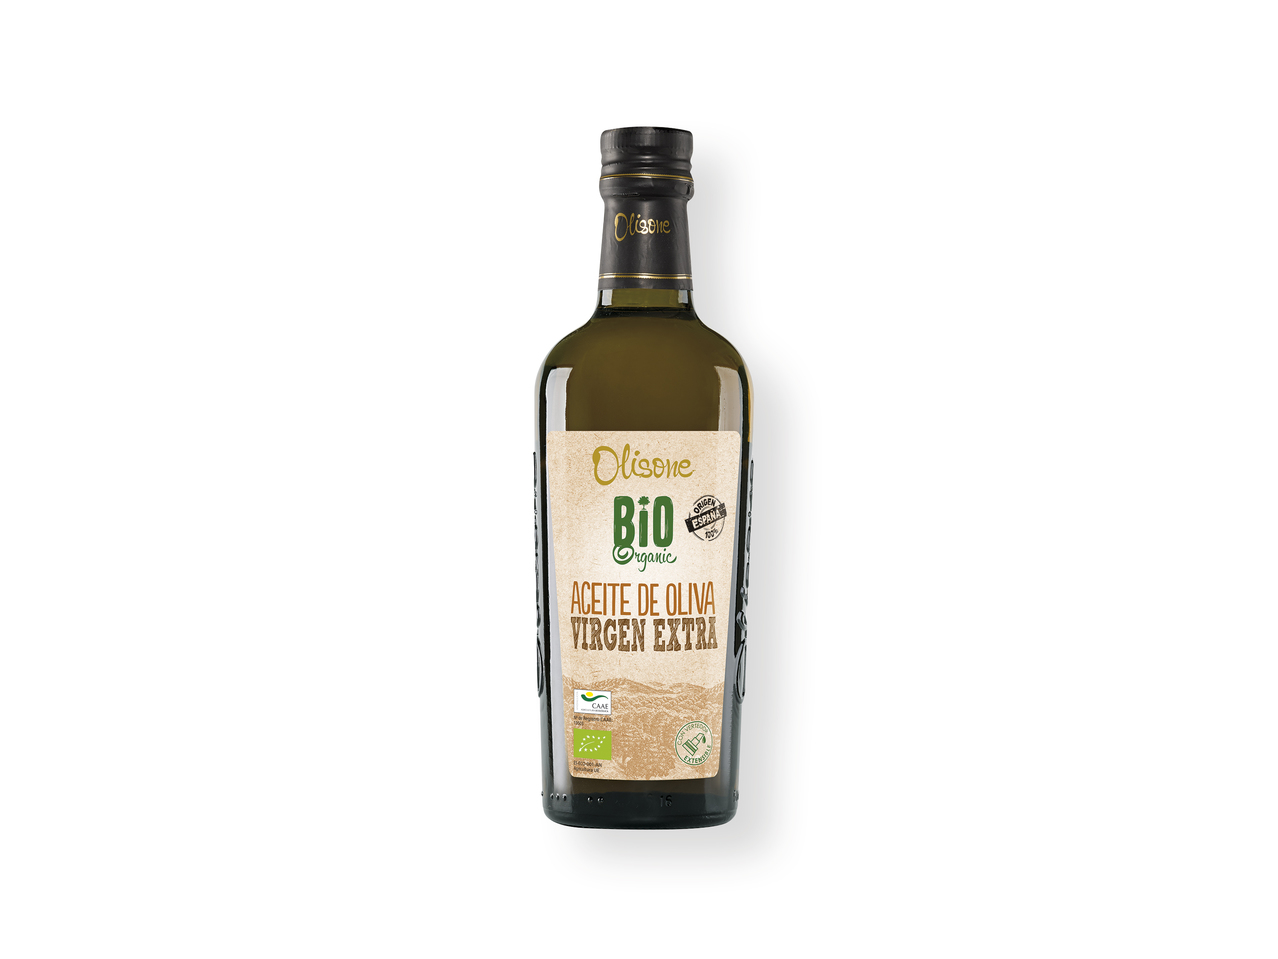 'Olisone(R)' Aceite de oliva virgen extra ecológico